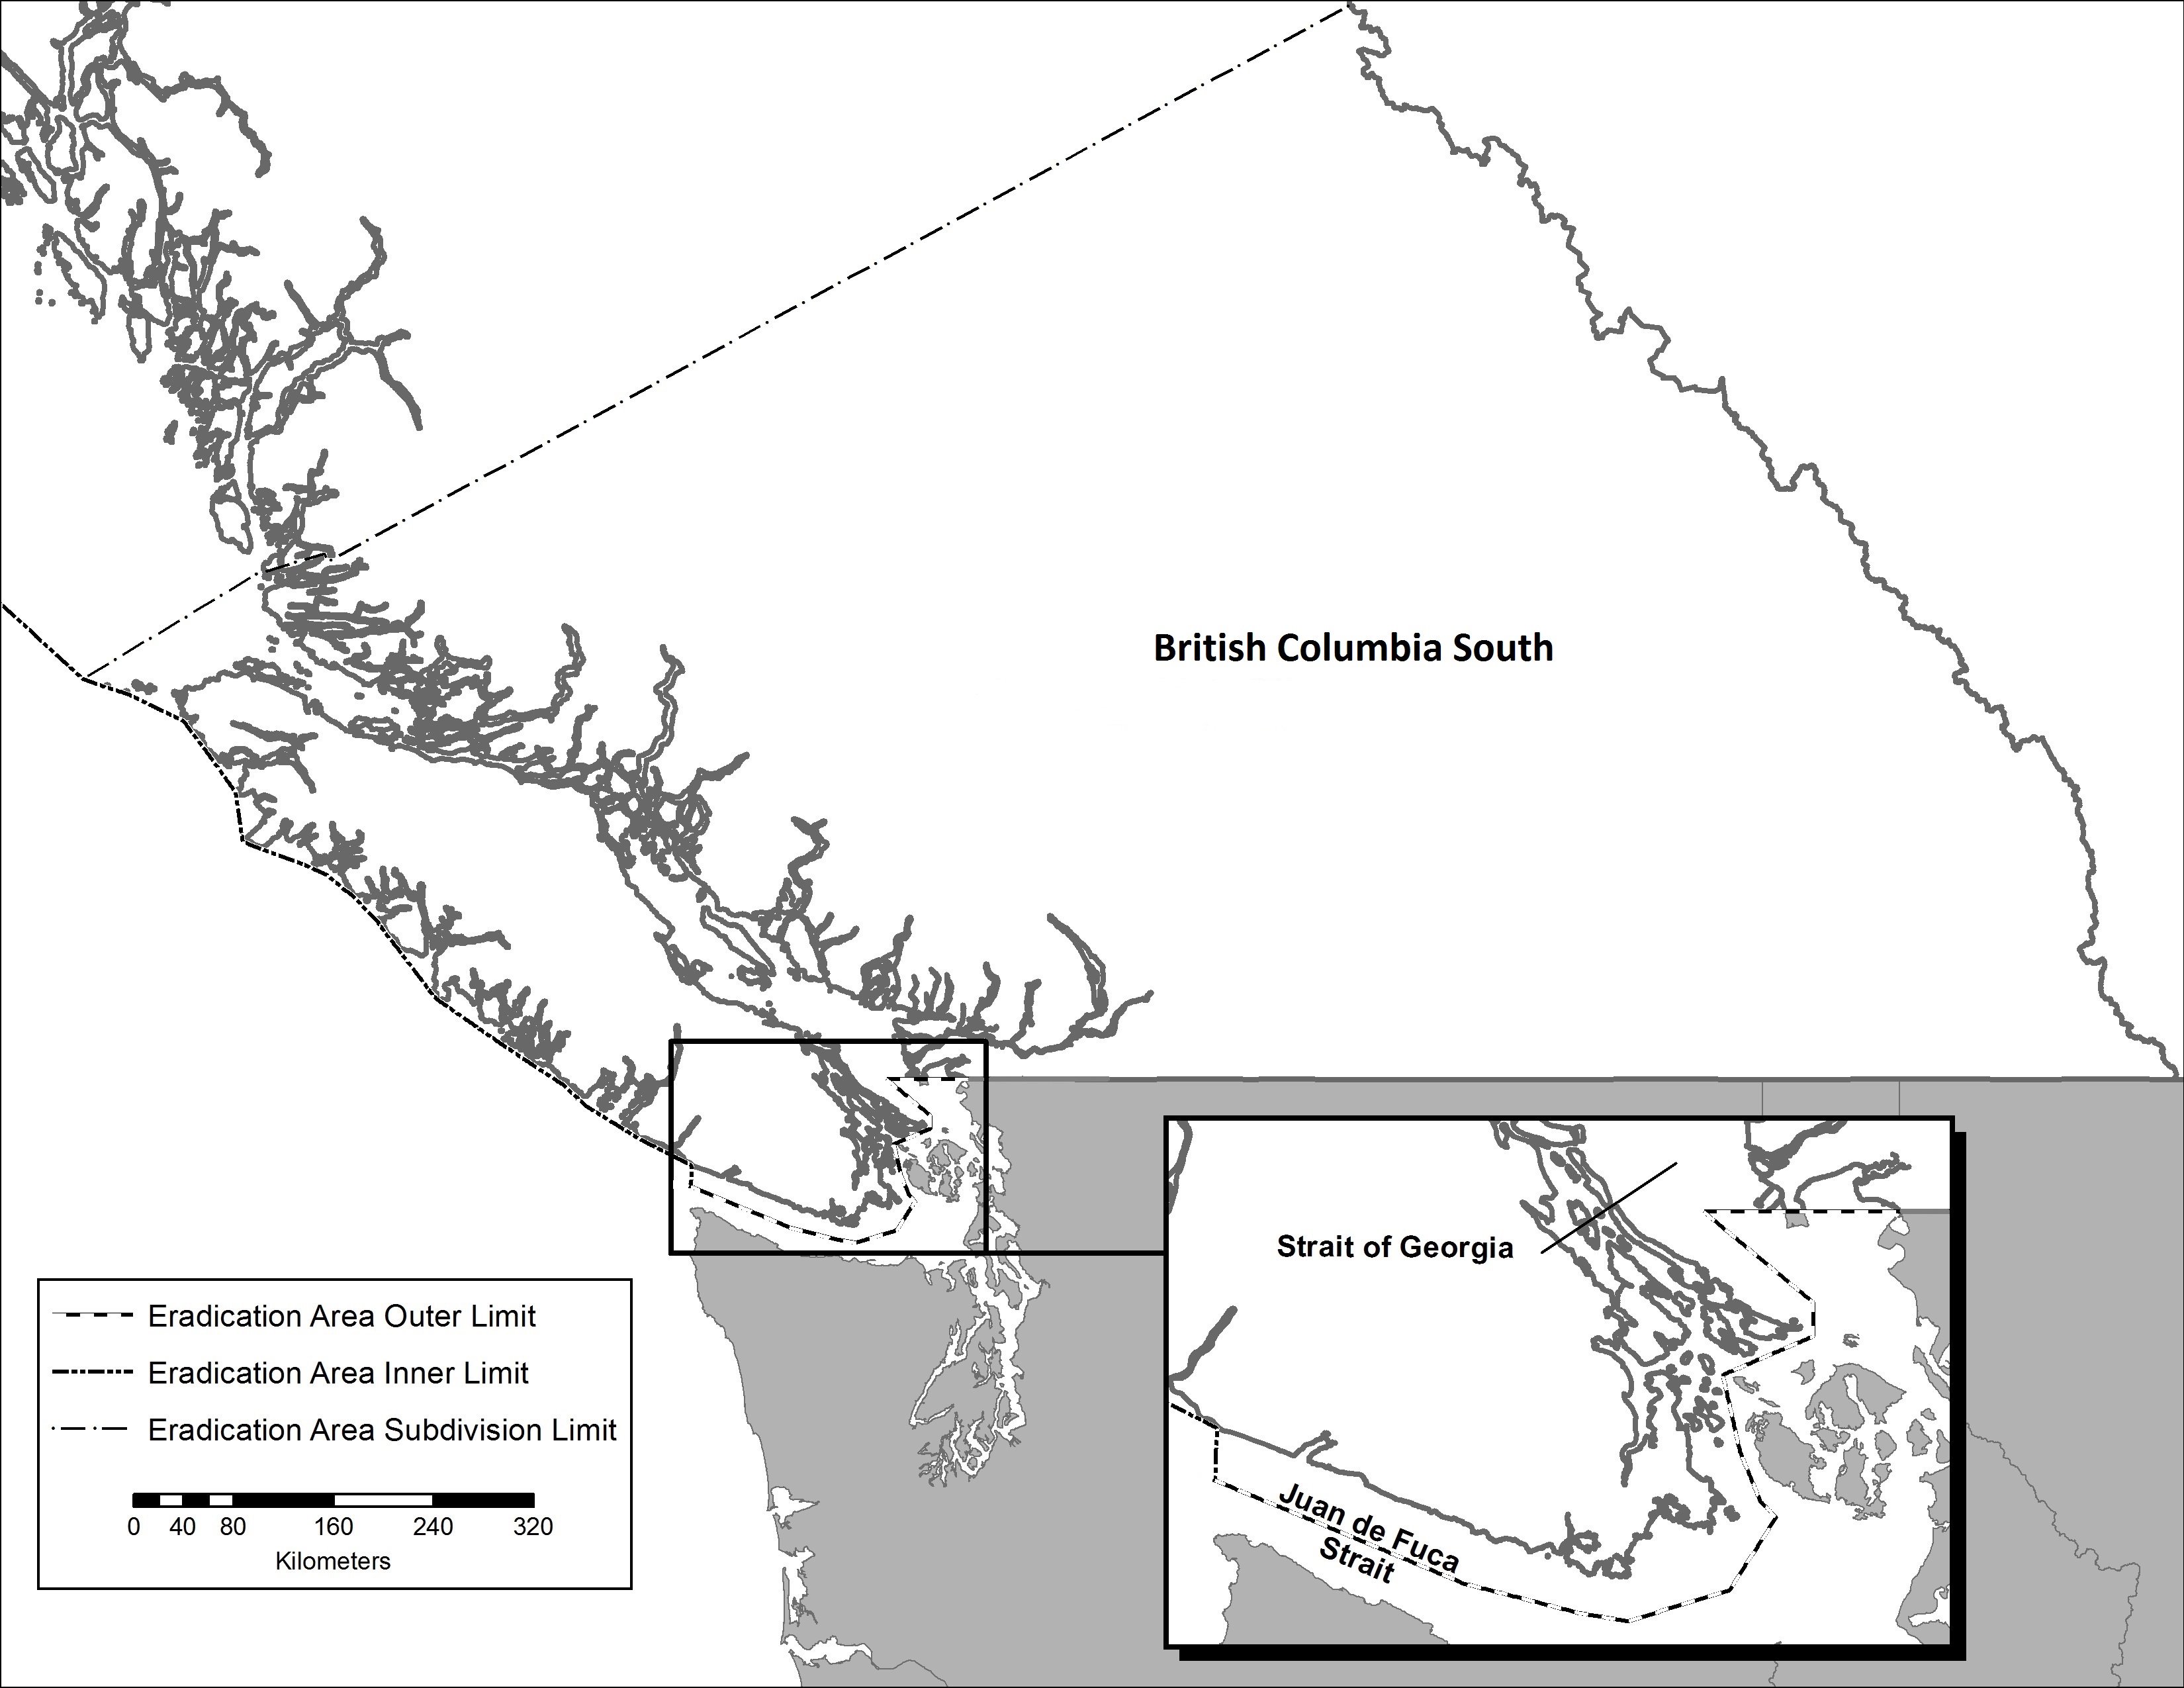 British Columbia South map. Description follows.